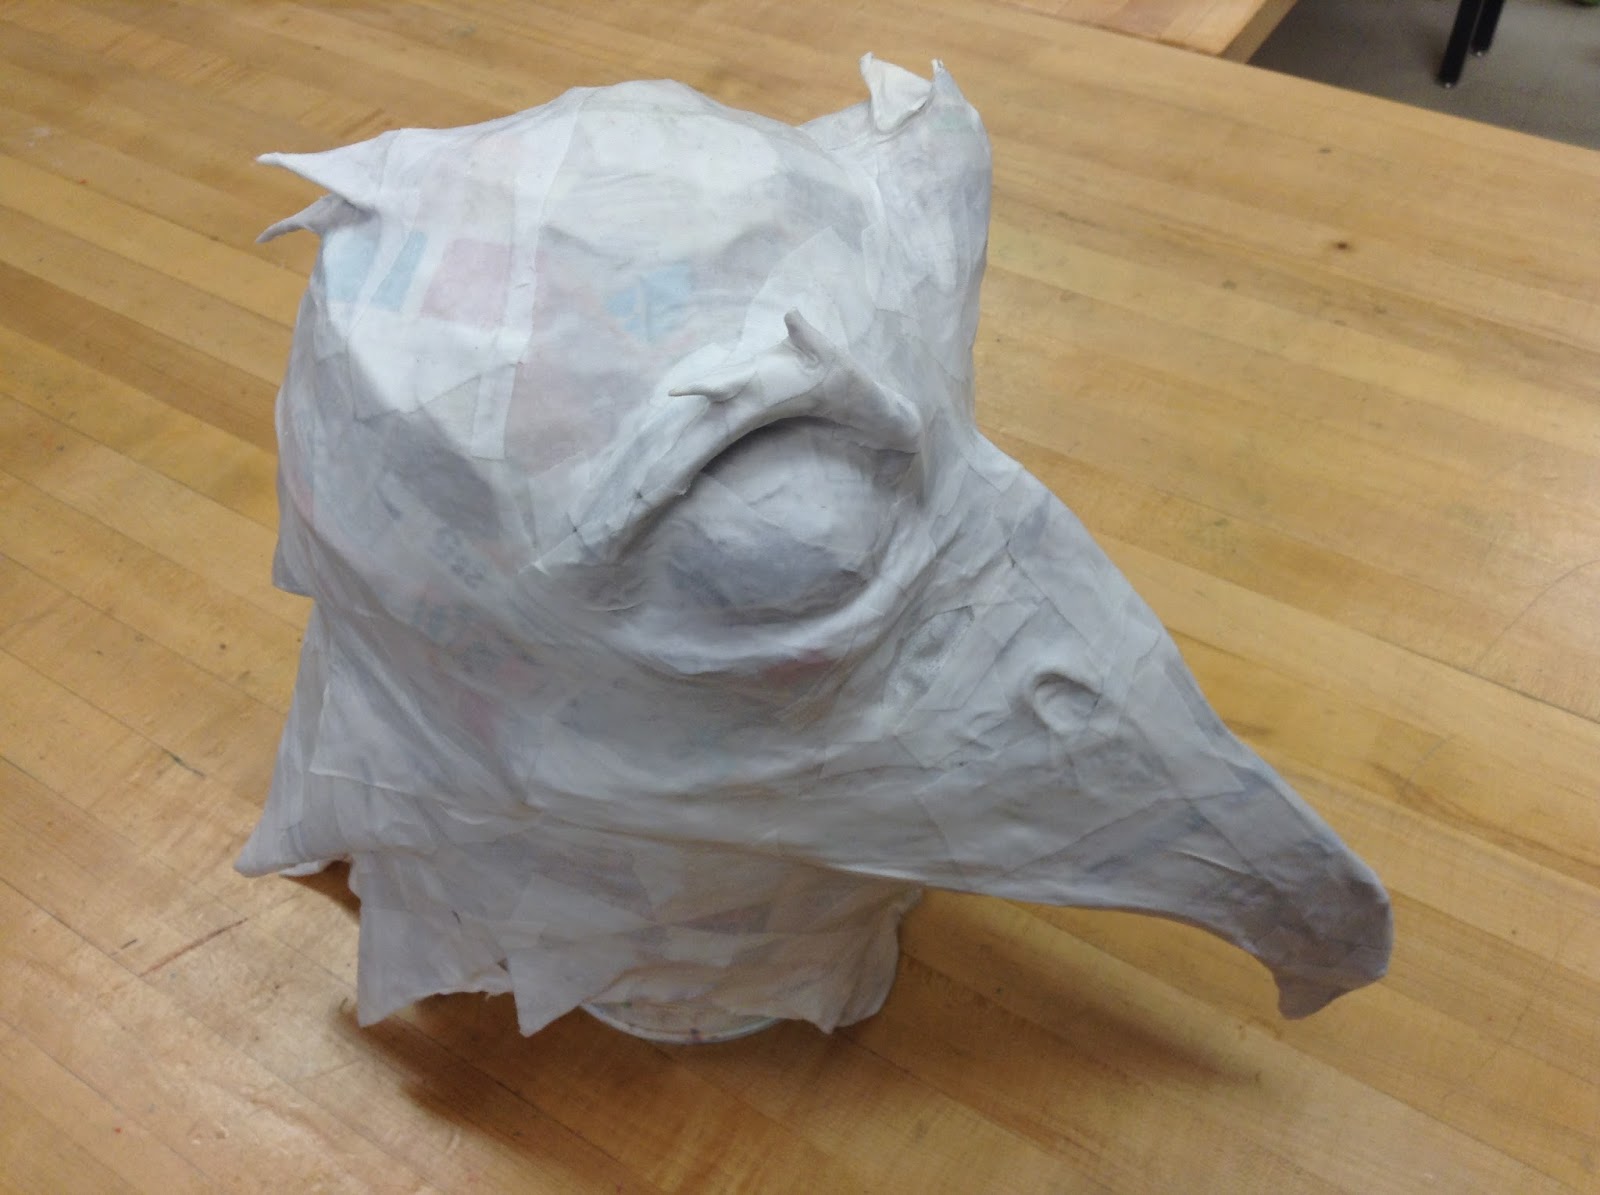 14er Art : How to make a paper mache eagle mask